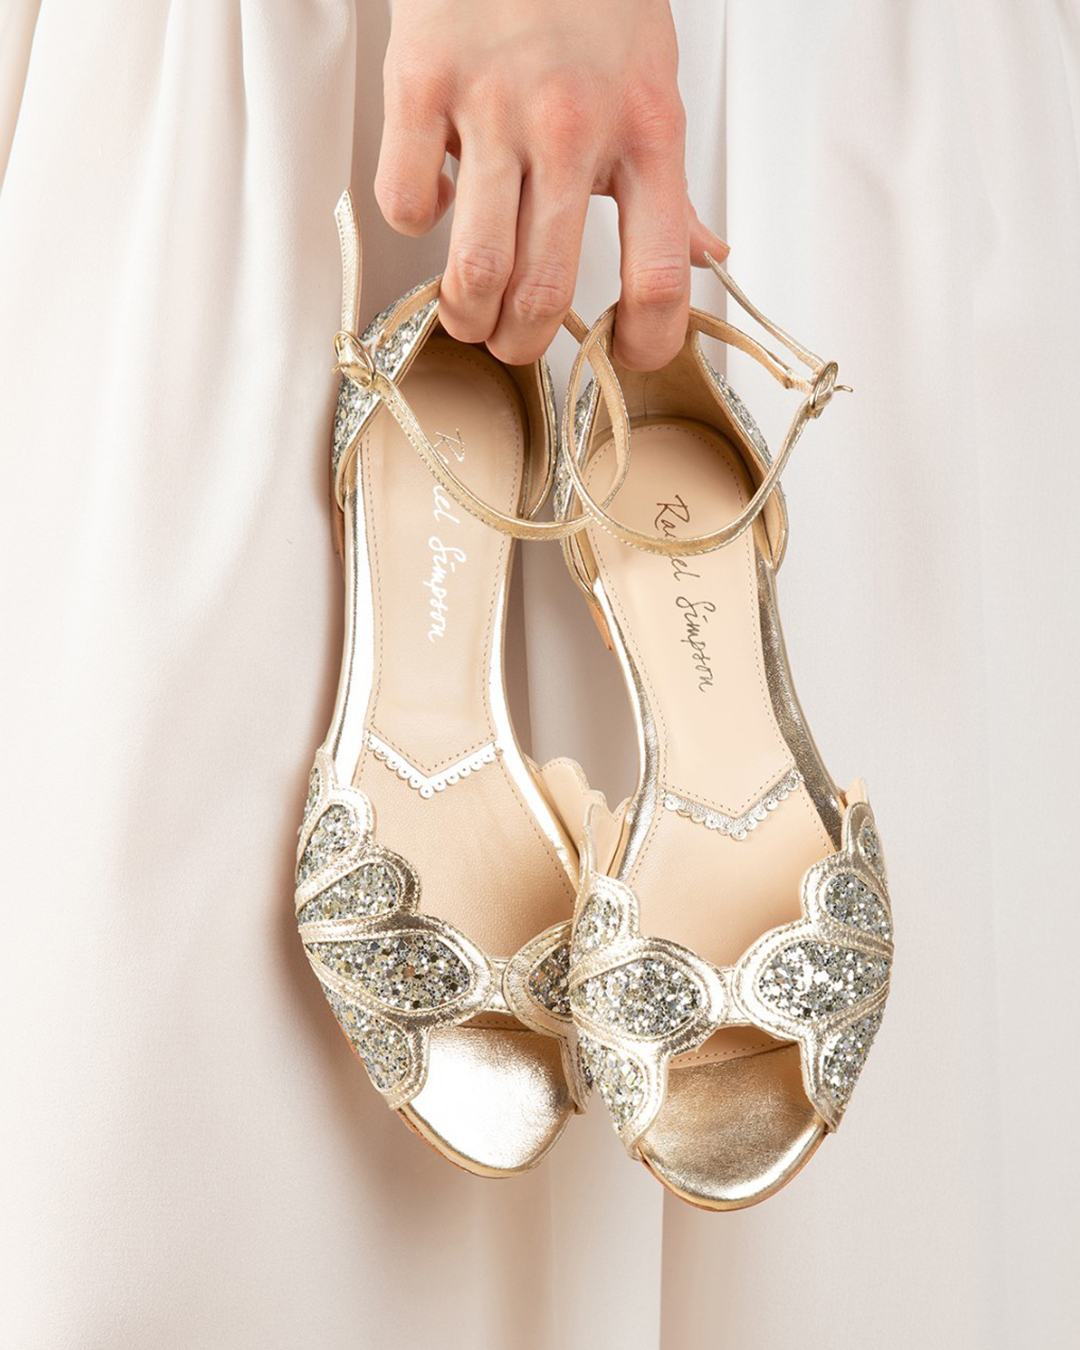 gold shoes for wedding flats comfortable rachelsimpson